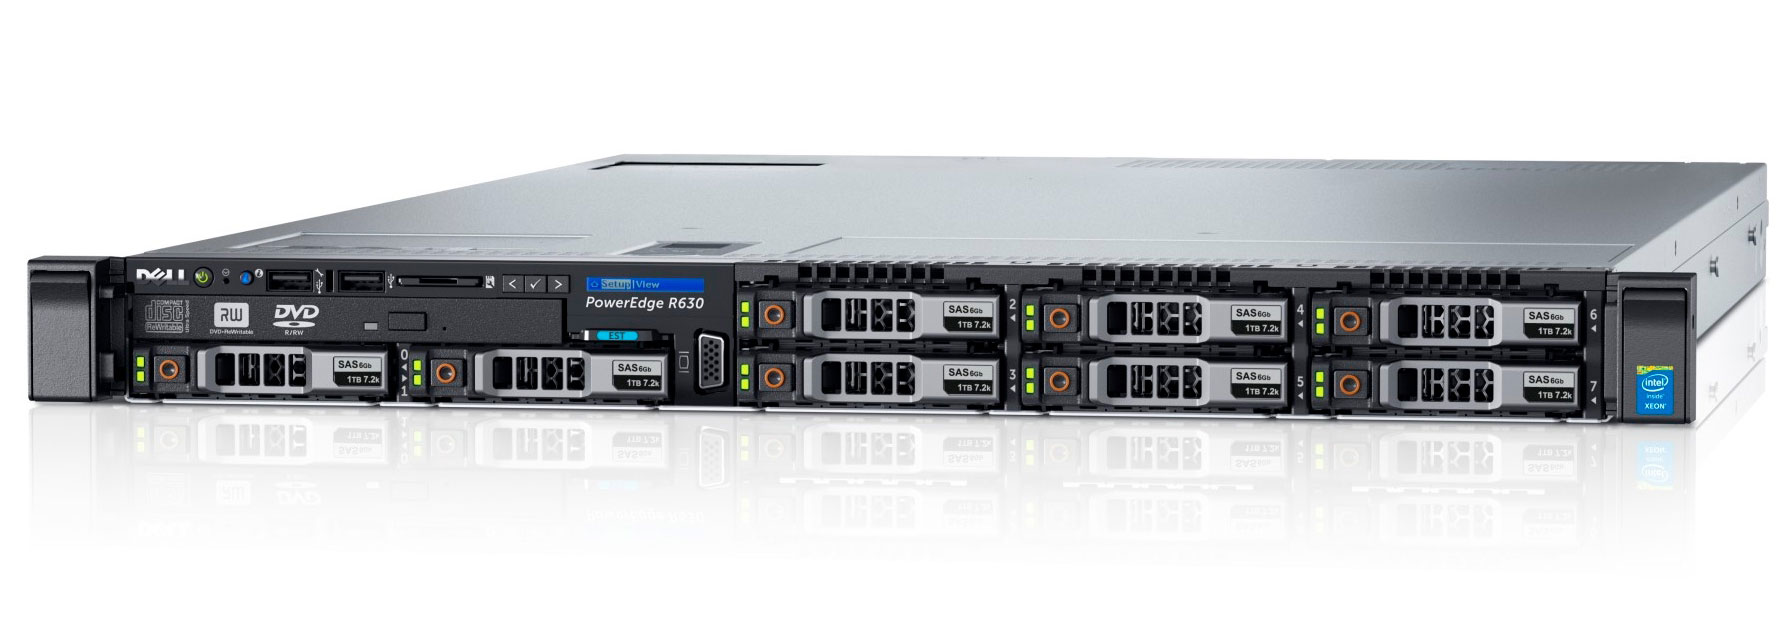 Подробное фото Сервер DELL PowerEdge R630 Xeon 2x E5-2696v4 256Gb 2133P DDR4 8x noHDD 2.5", SAS RAID Perc H730 mini, 1024Mb, DVD, 2*PSU